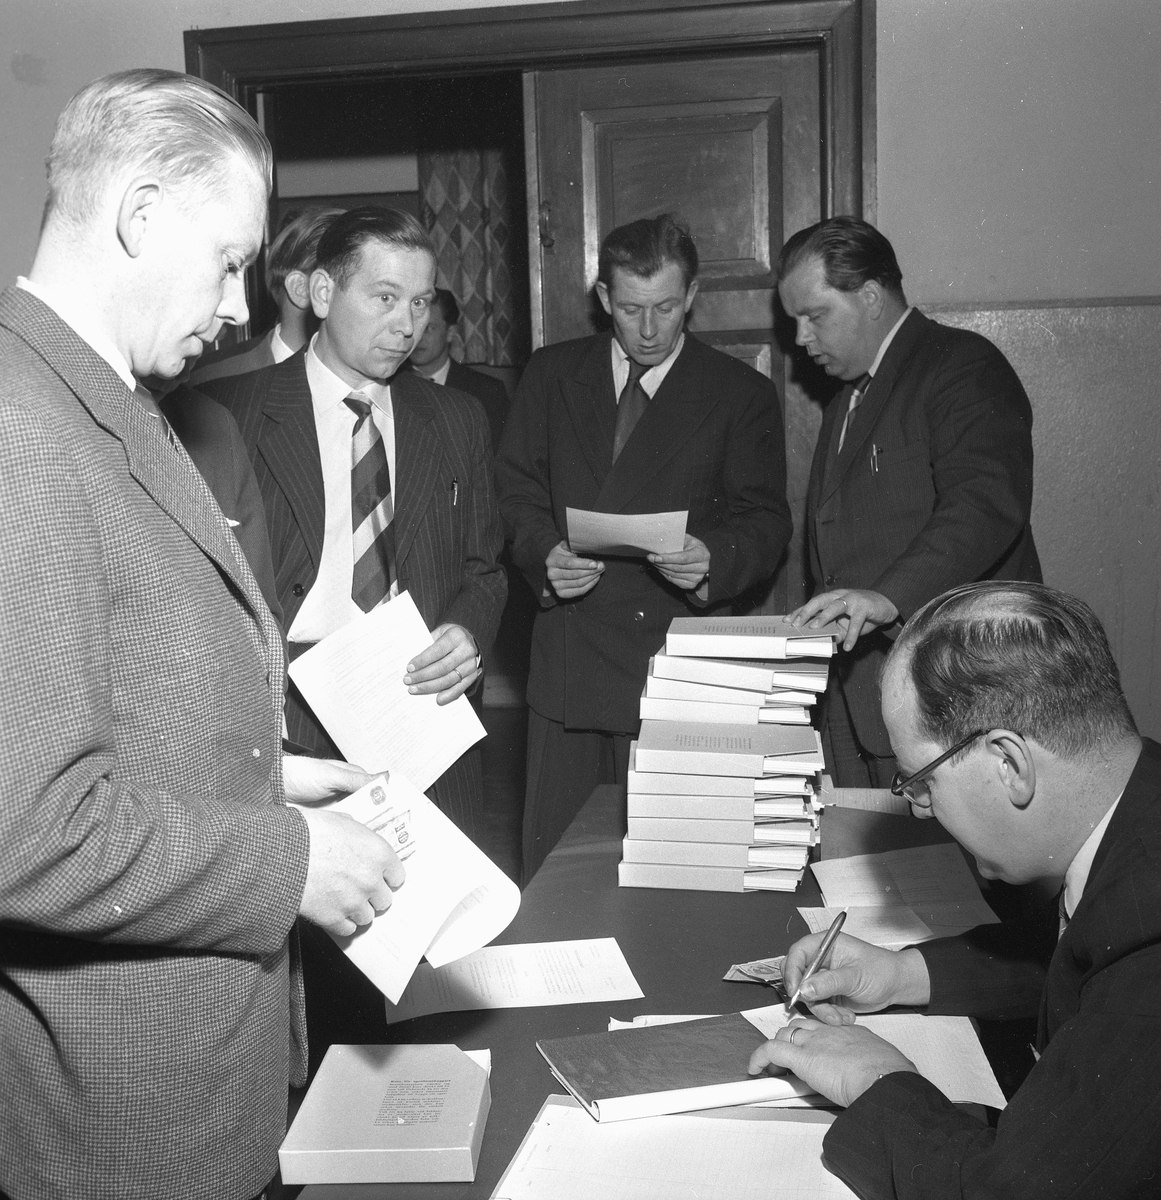 Kurs i egnahemsbygge.
November 1956.